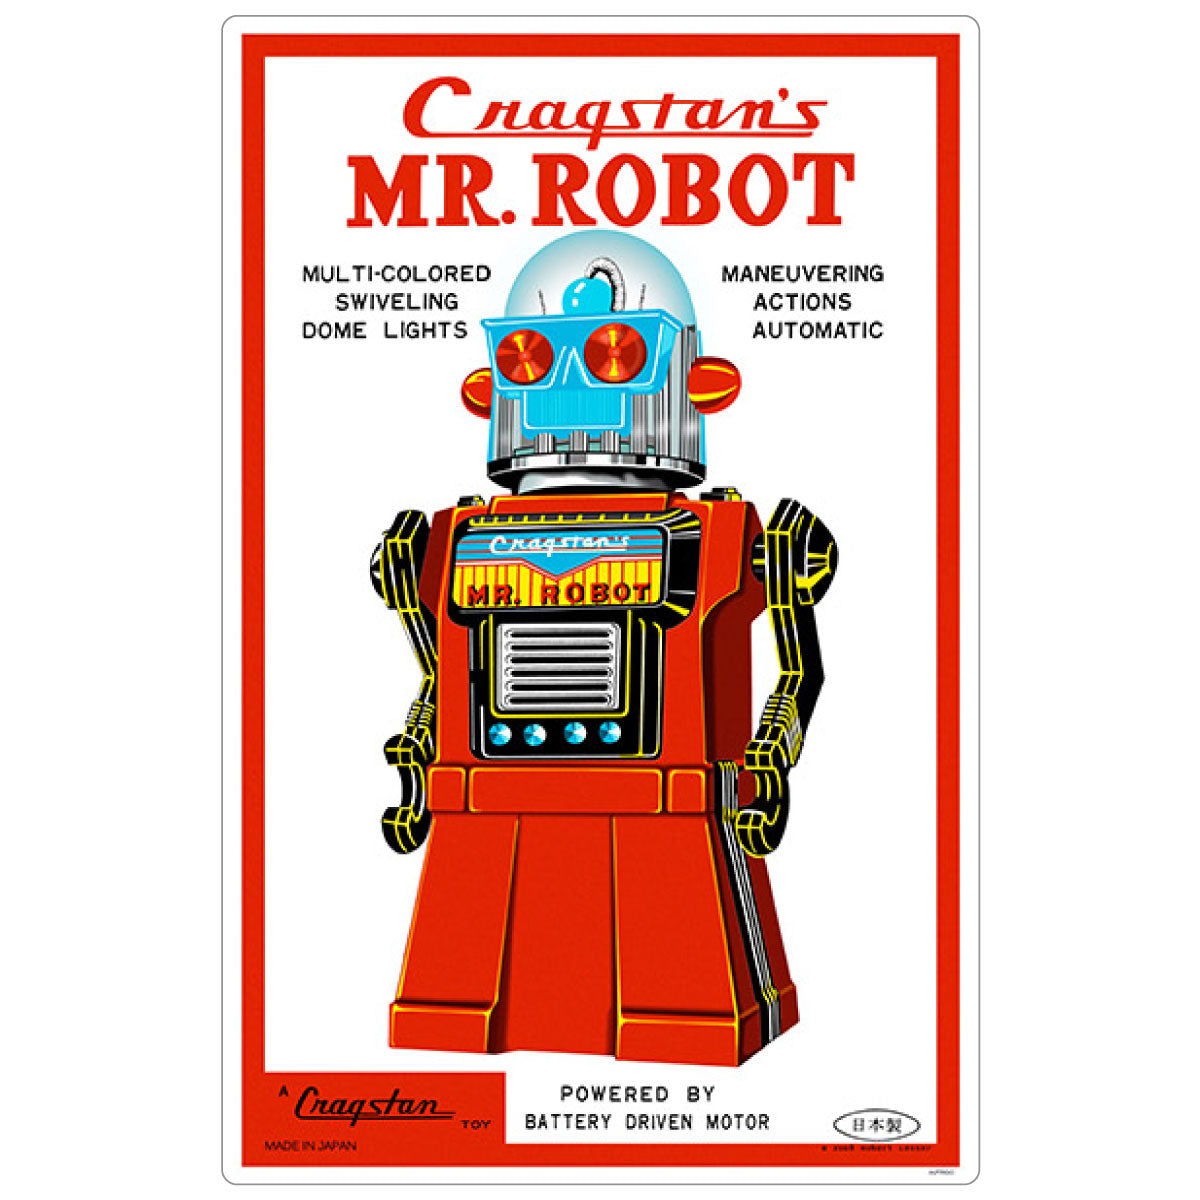 retro robot poster